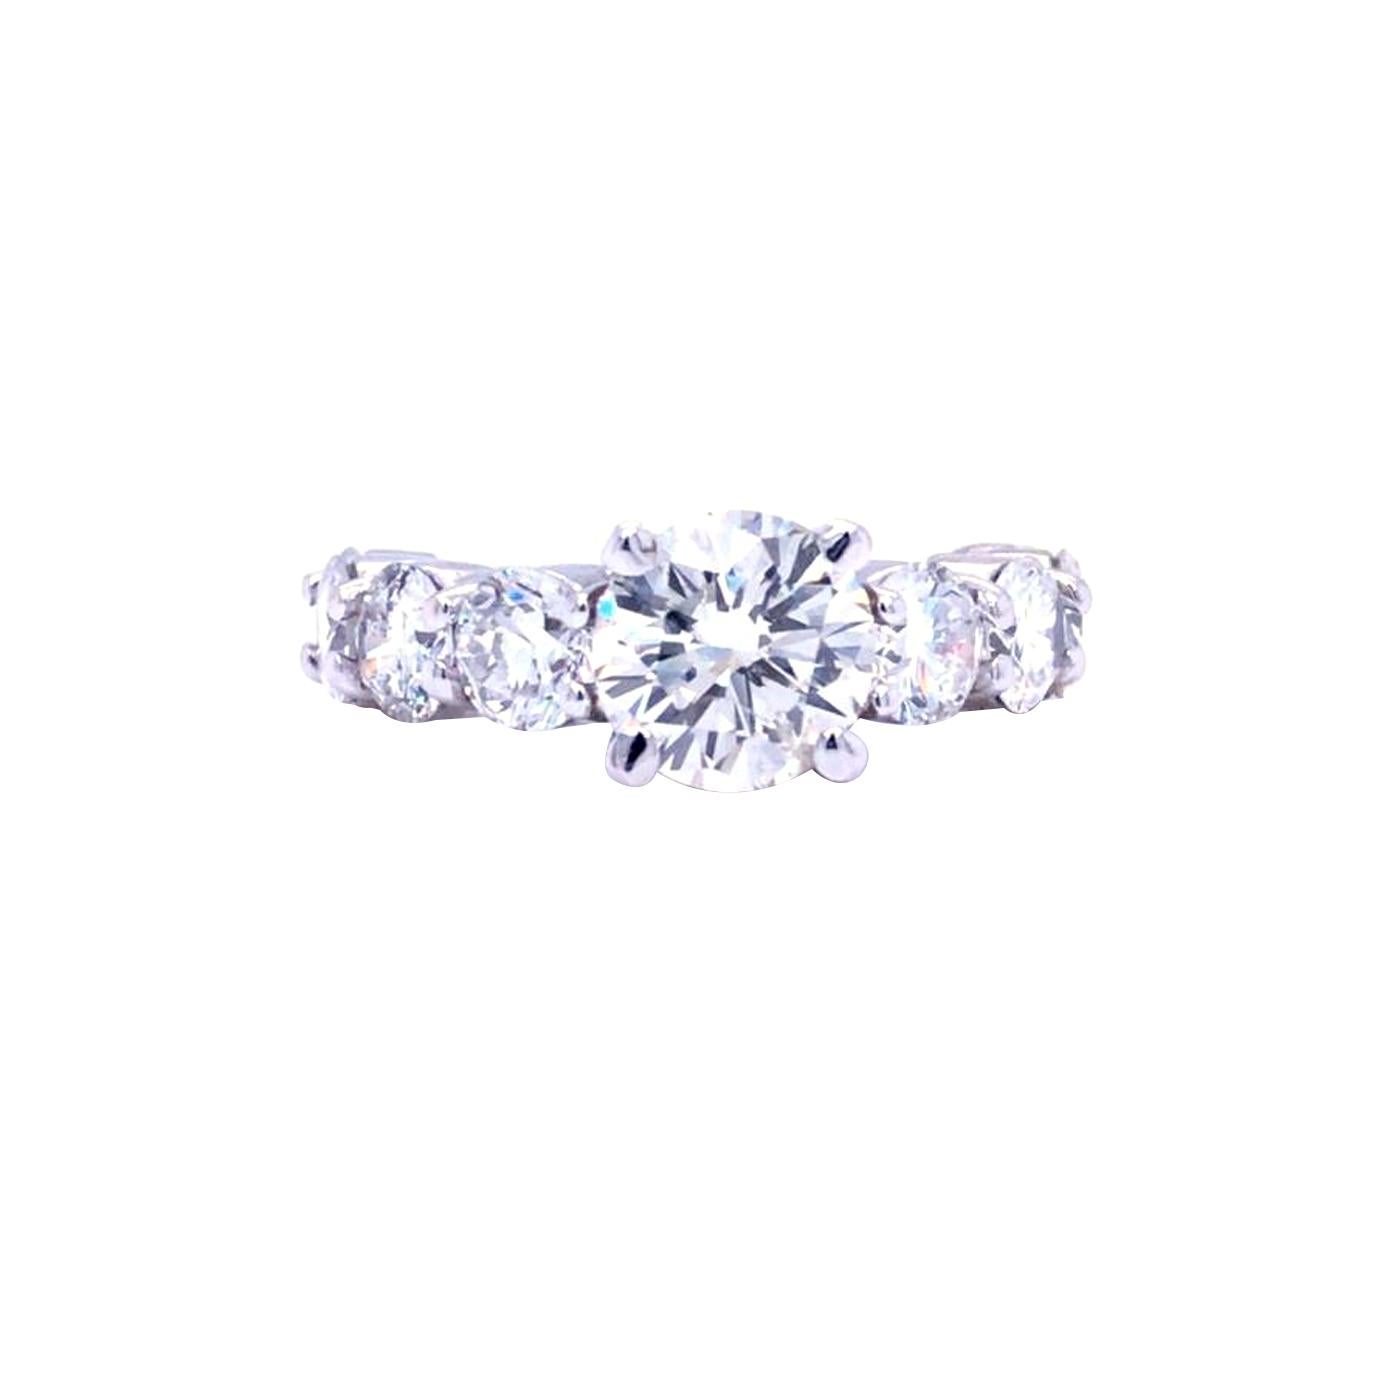 1.58 carat diamond ring